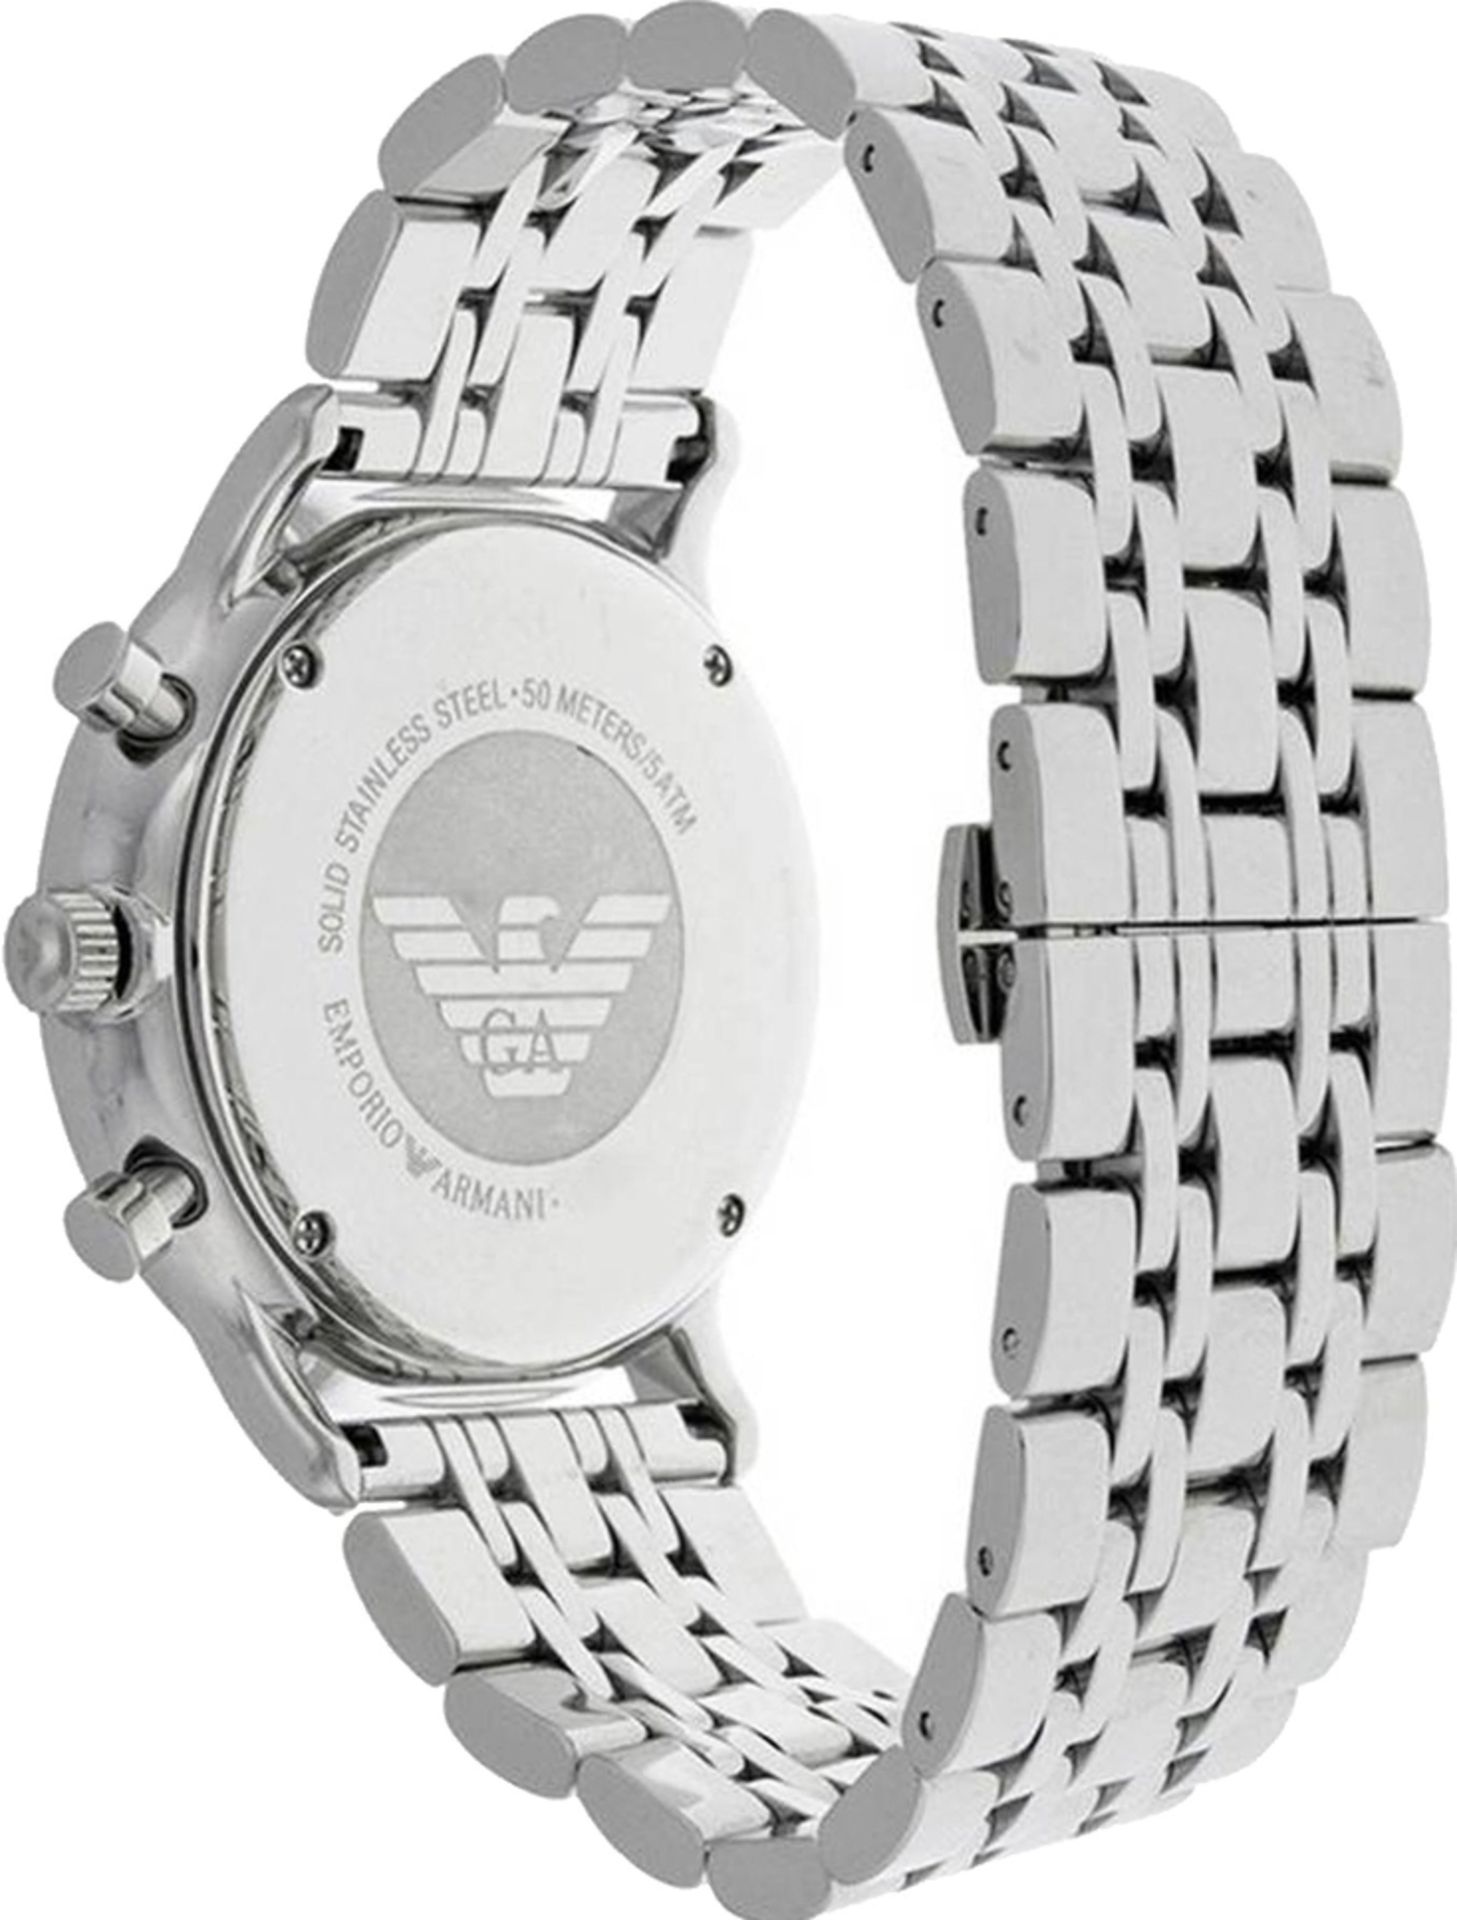 Emporio Armani AR0389 Men's Gianni Black Dial Silver Bracelet Chronograph Watch - Image 7 of 8